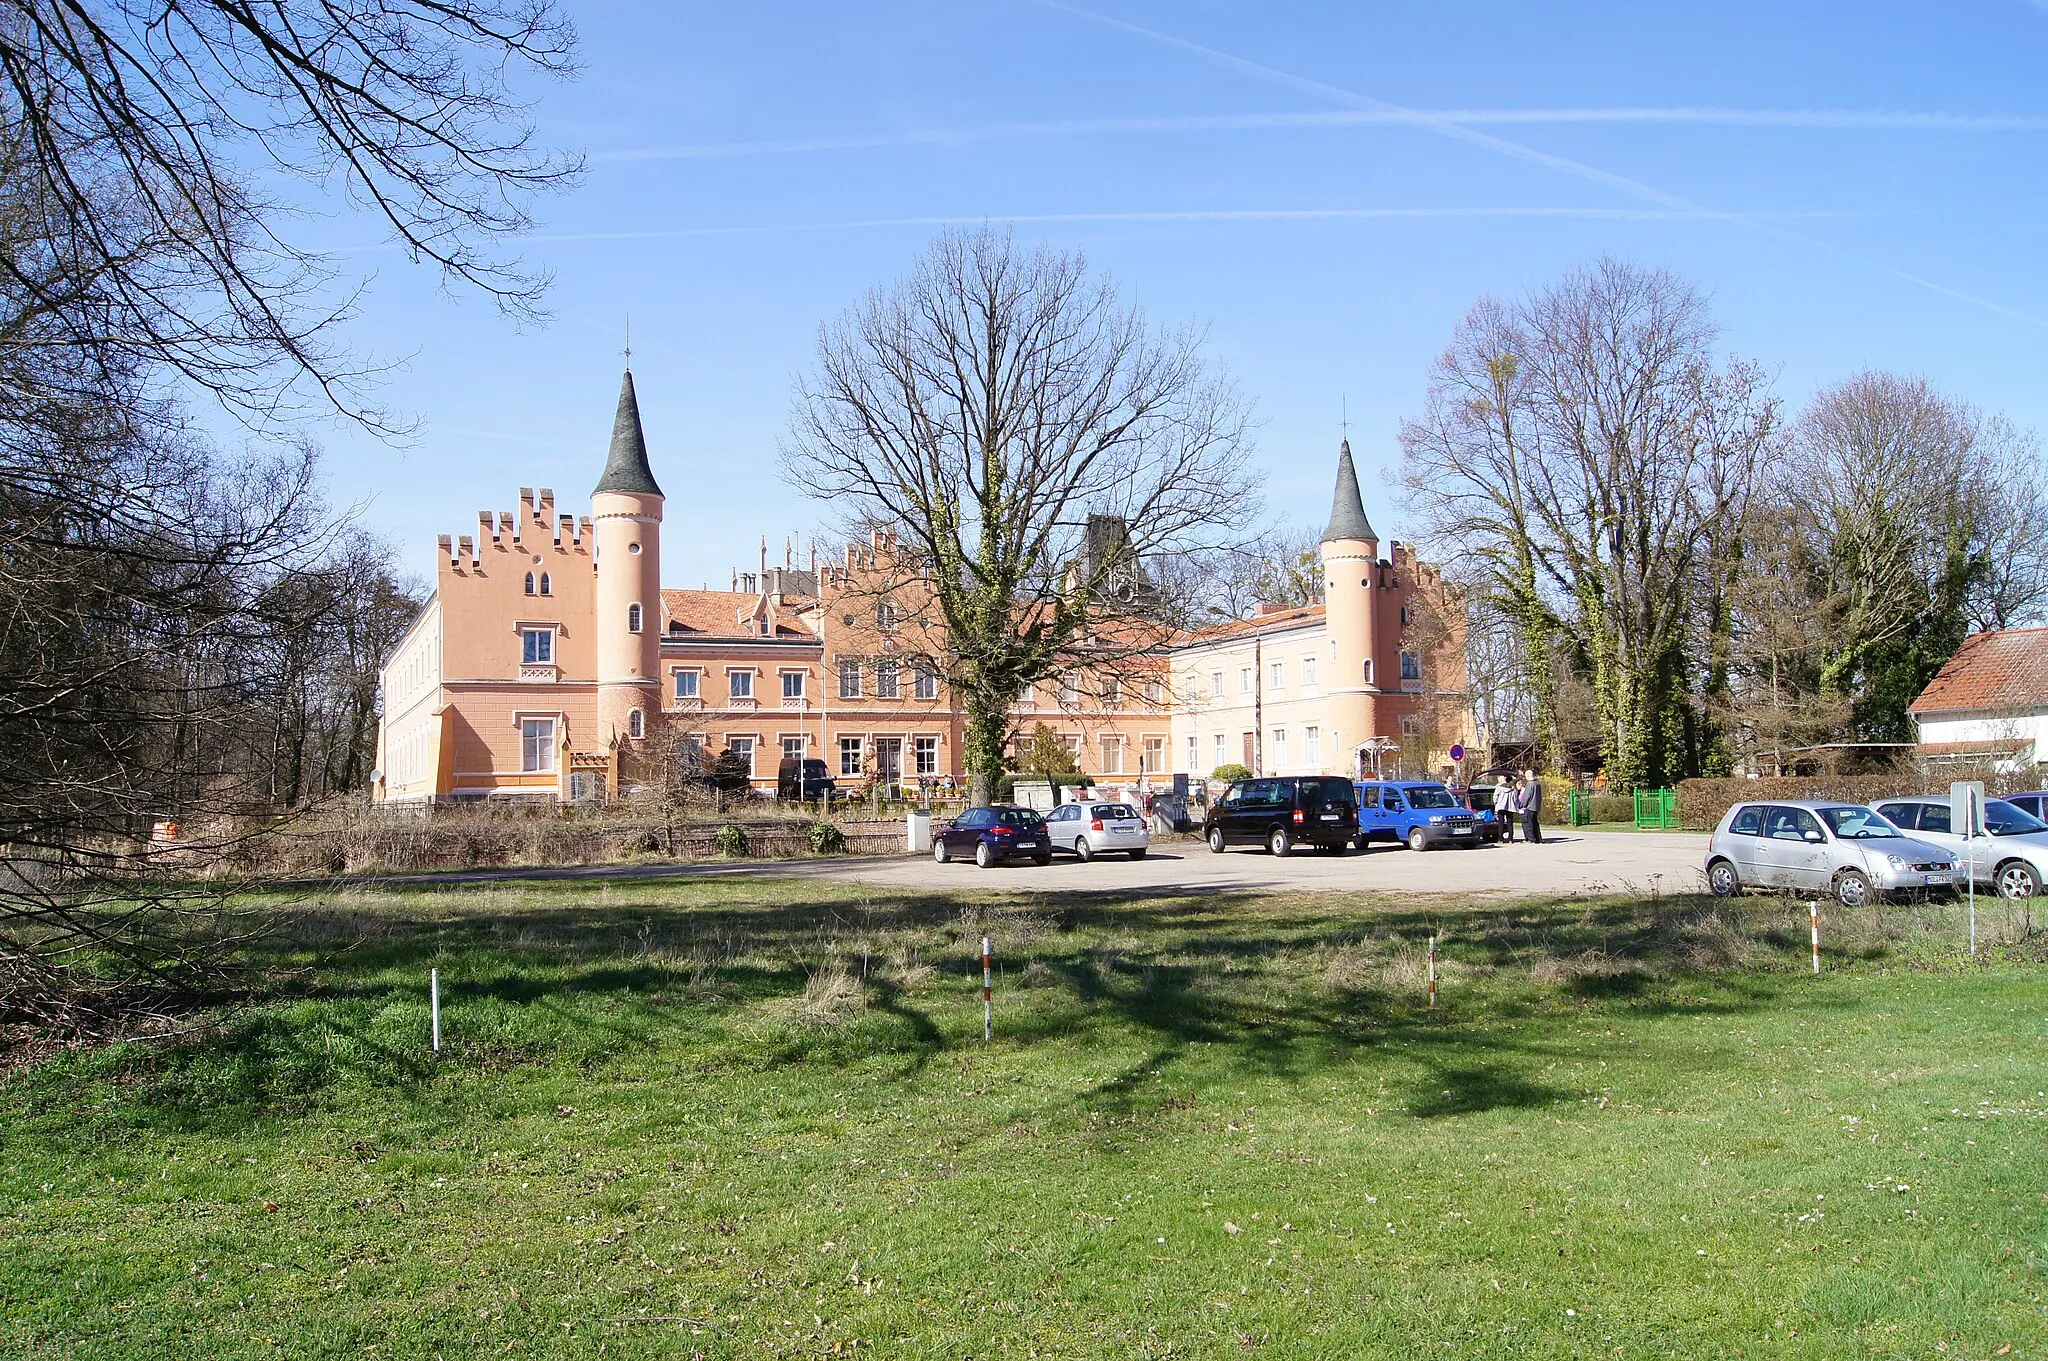 Photo showing: Castle Gusow, Gusow-Platkow, Brandenburg, Germany